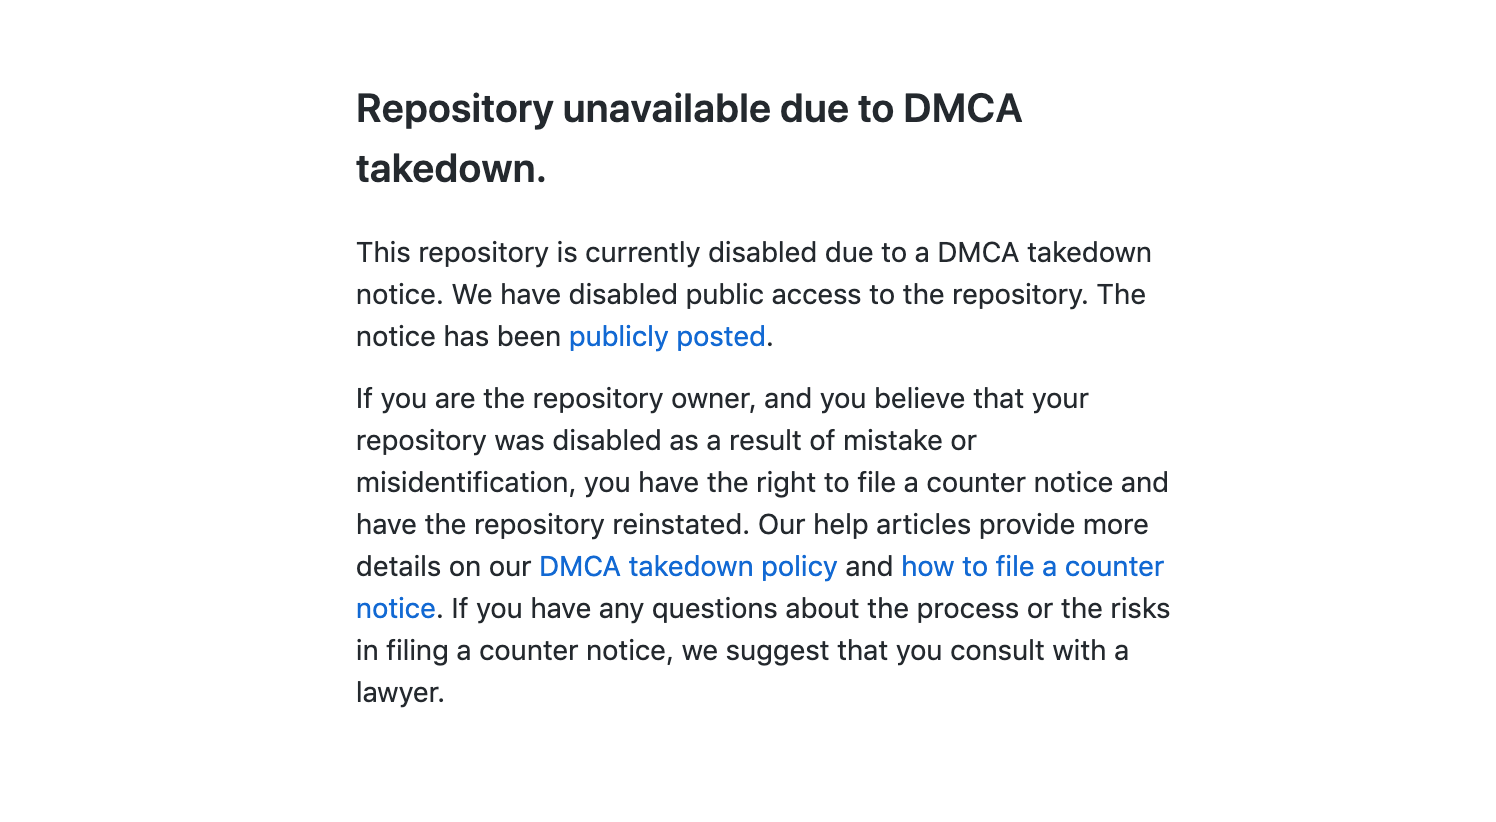 DMCA takedown notice on Github